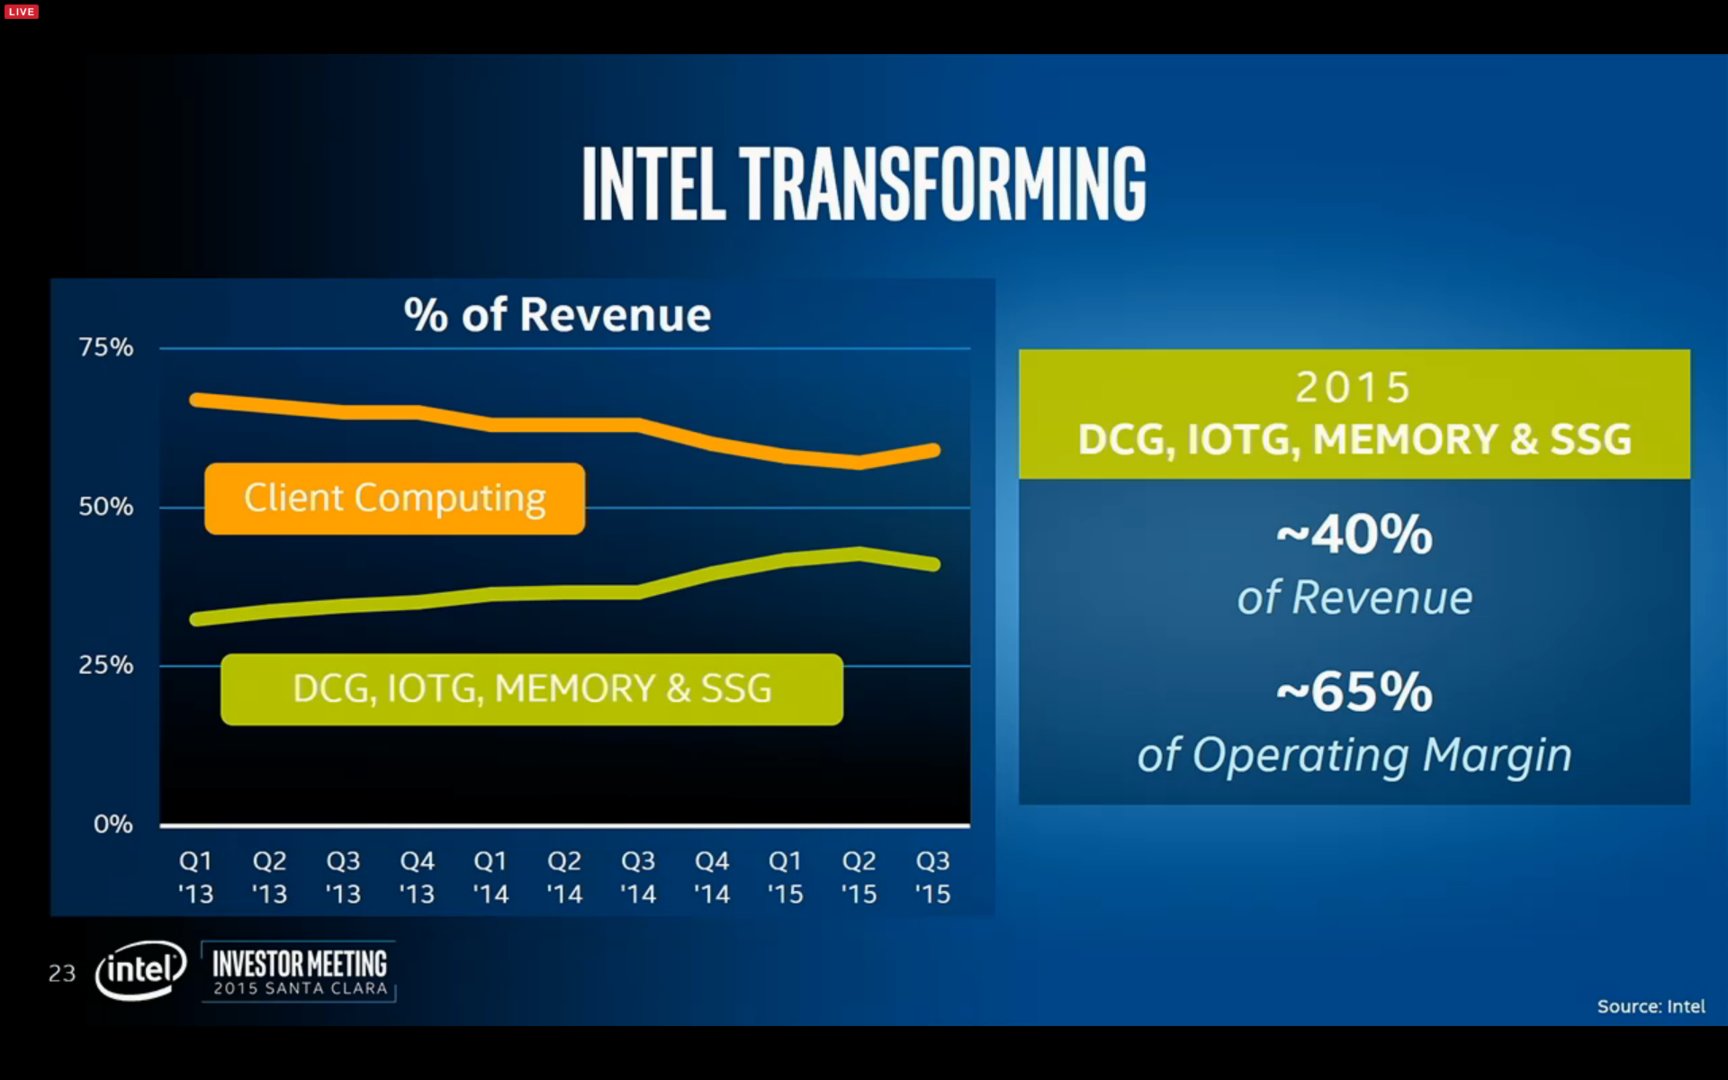 Intel Investor Meeting 2015